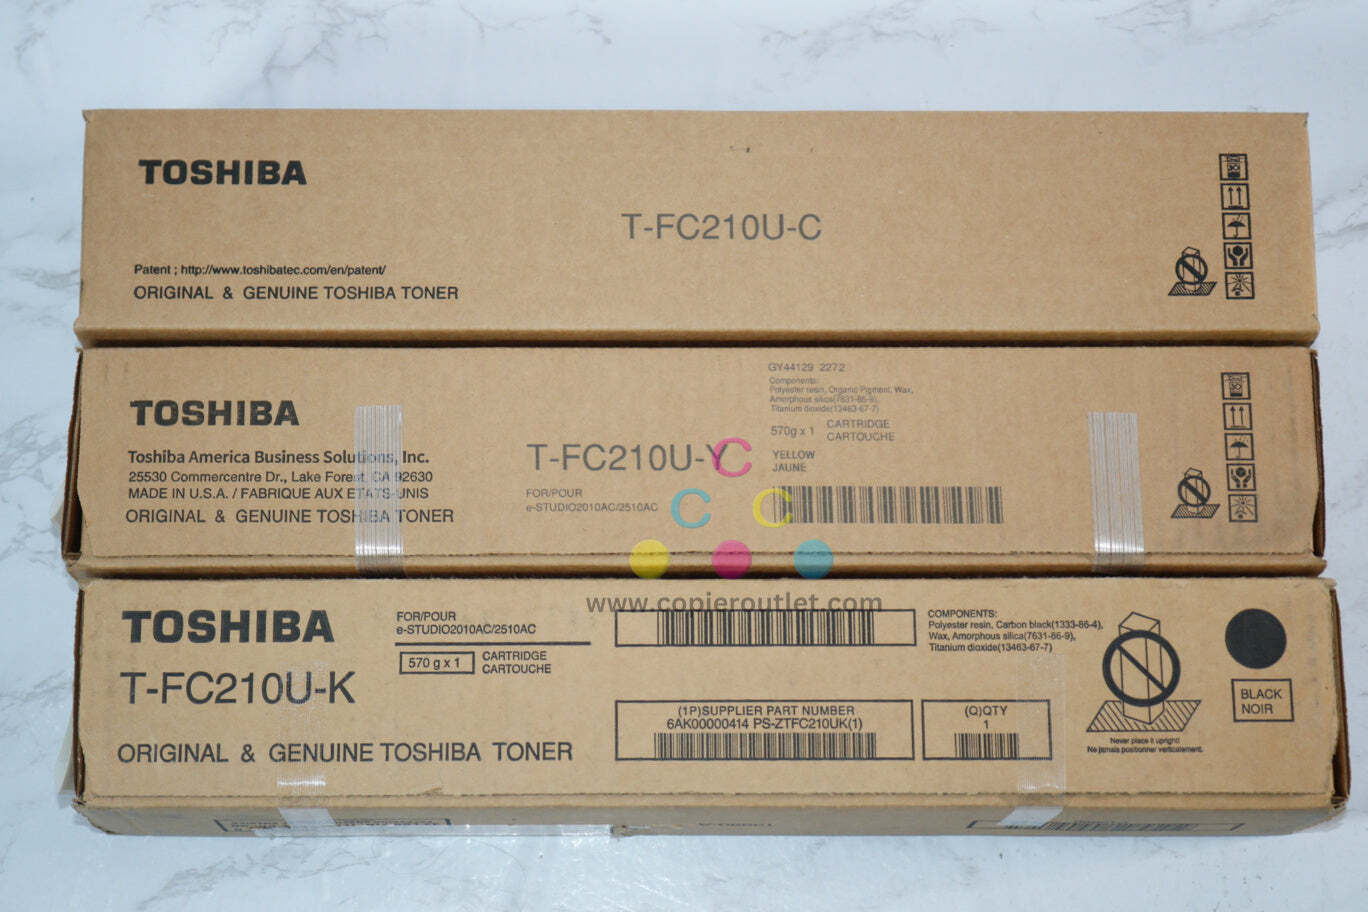 3 New OEM Toshiba eSTUDIO 2010AC/2510AC, T-FC210U/T-FC210U CYK Toner Cartridges